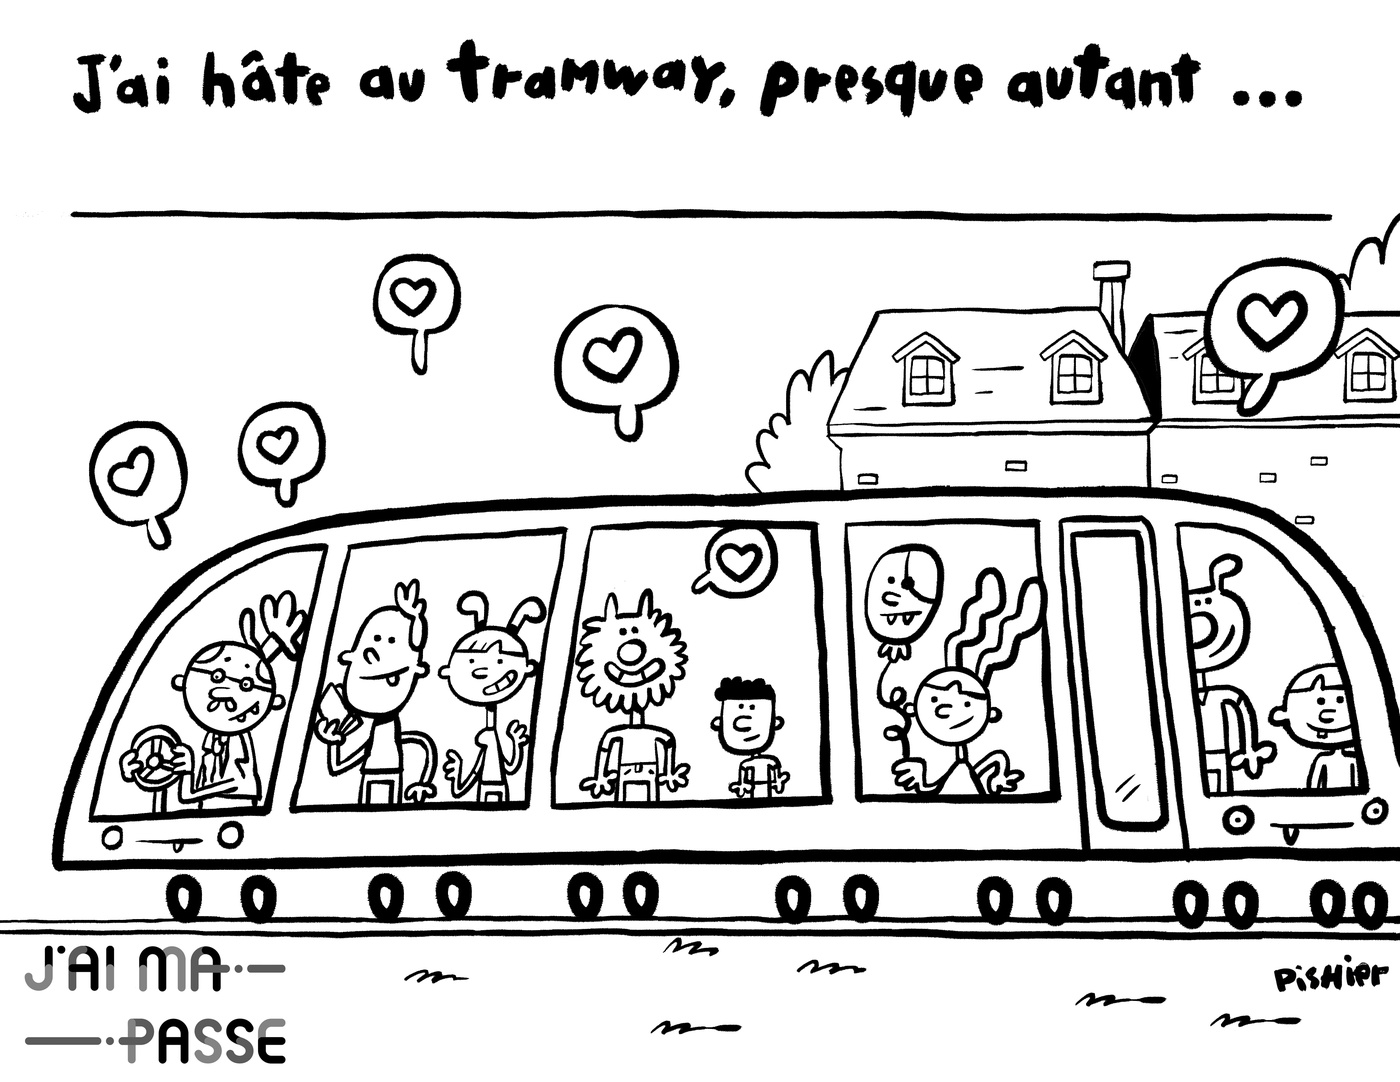 PisHier - Tramway